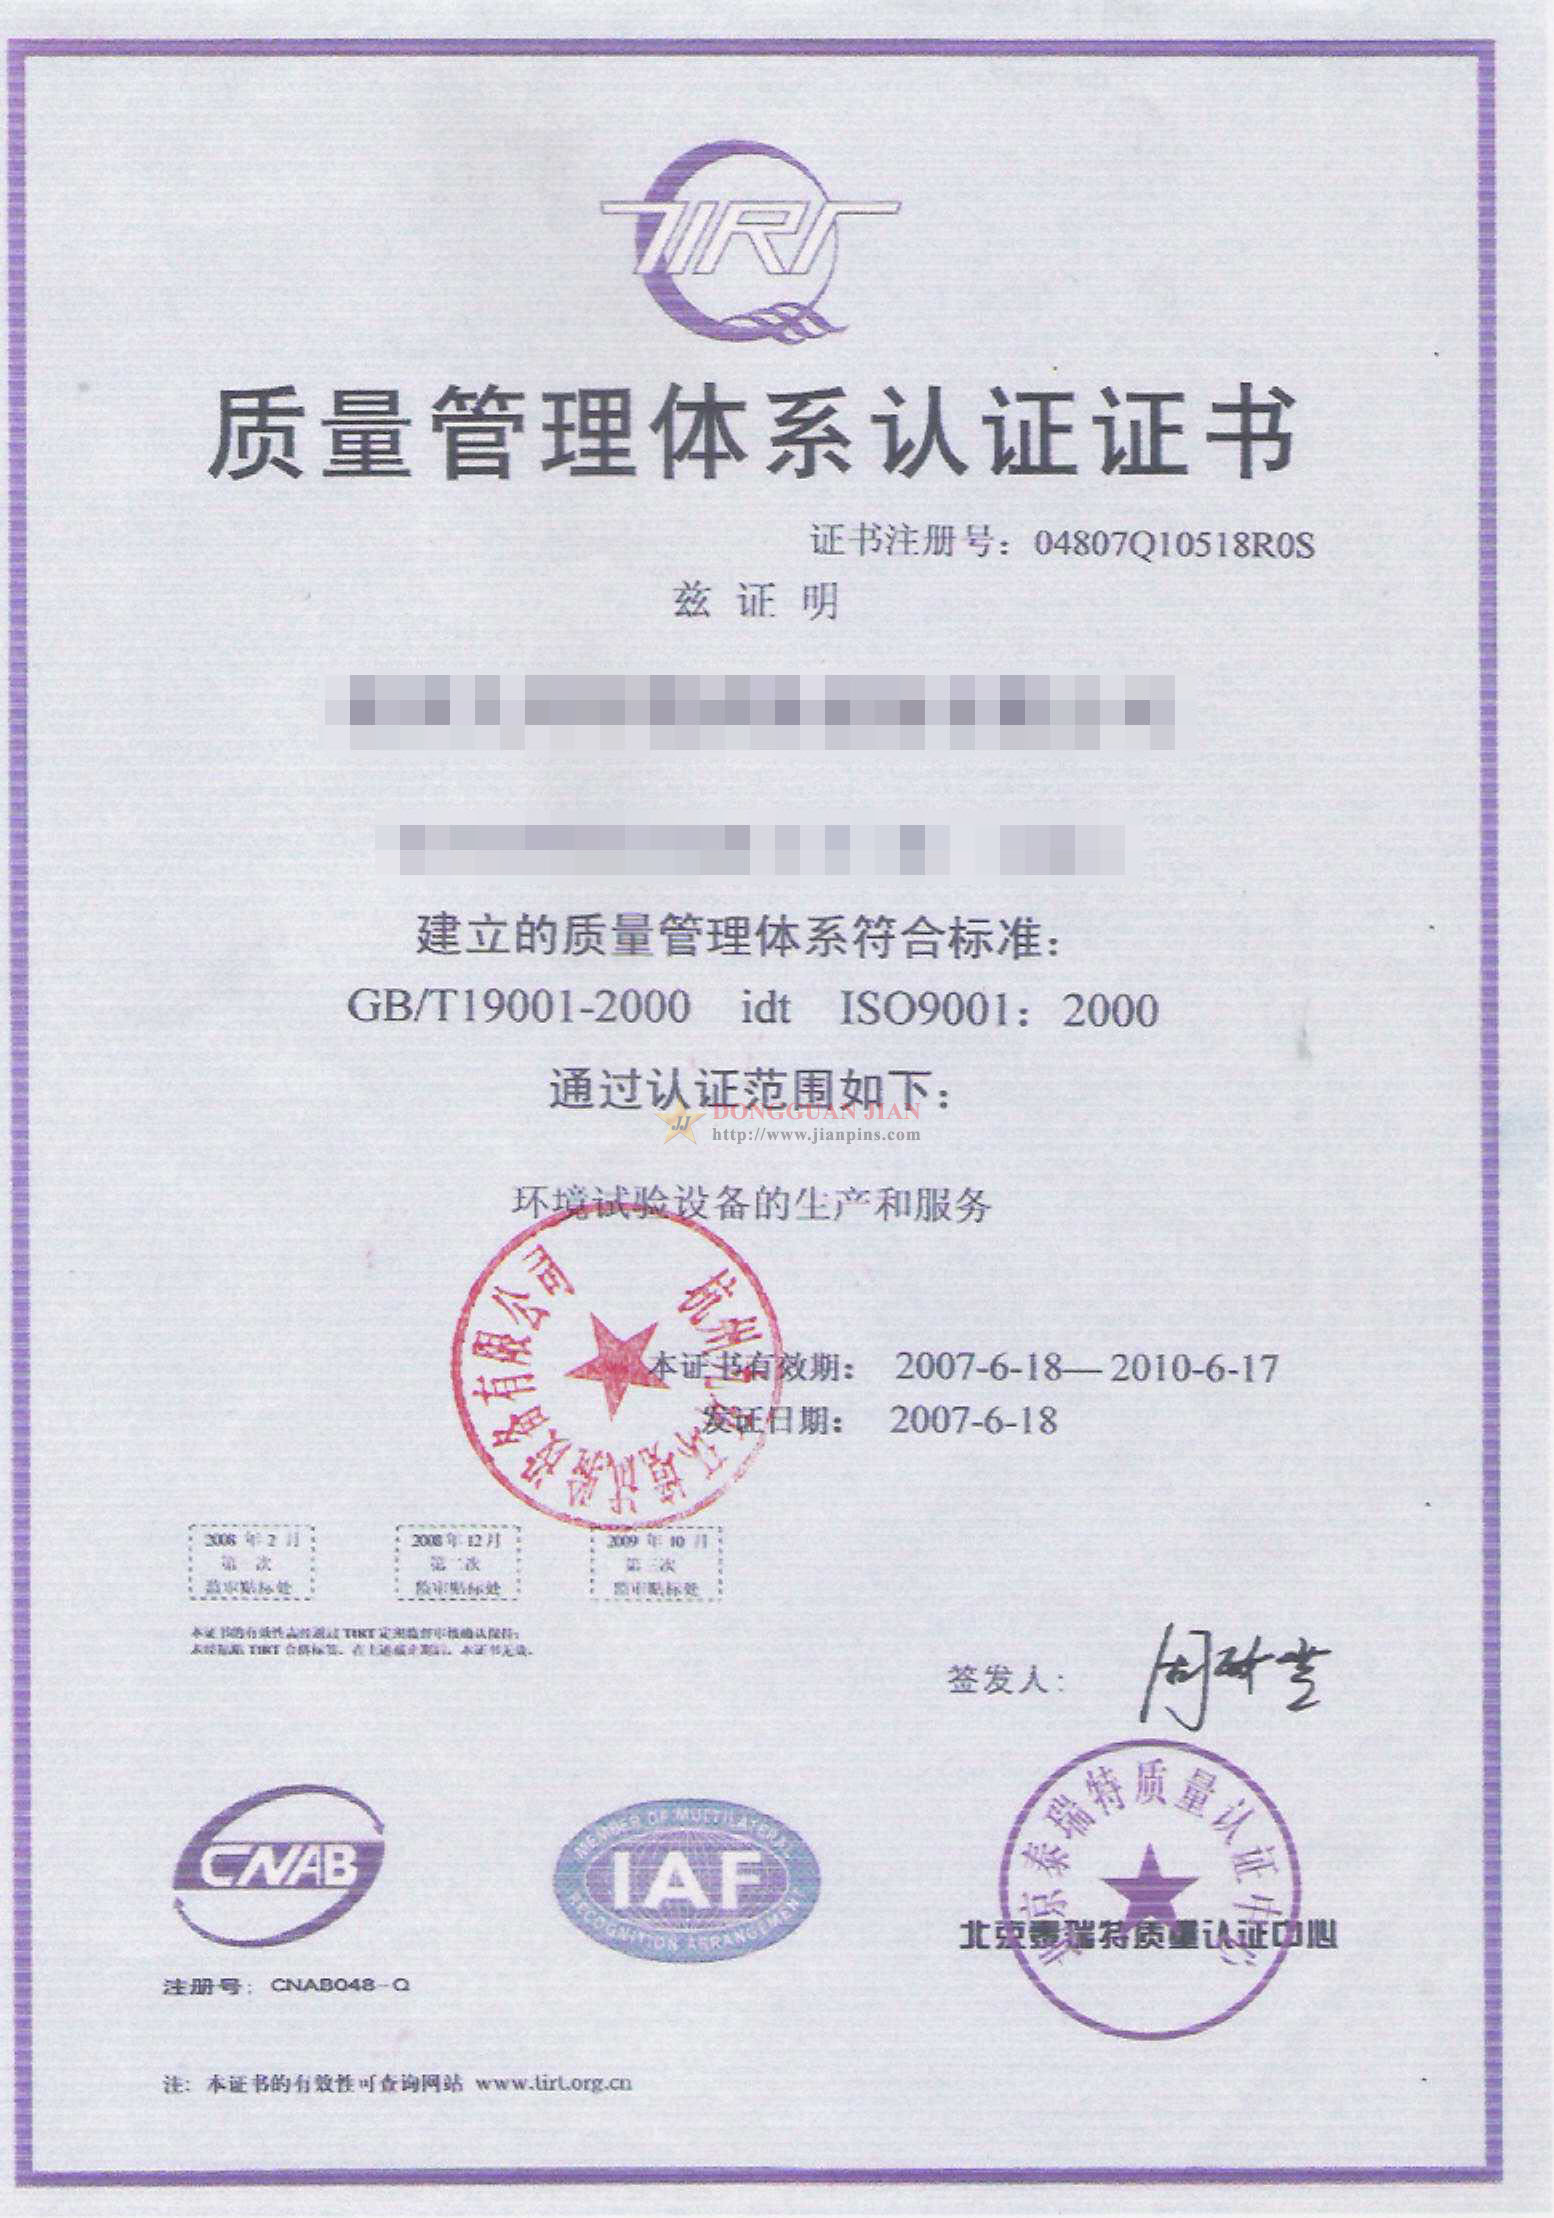 Certificadon1